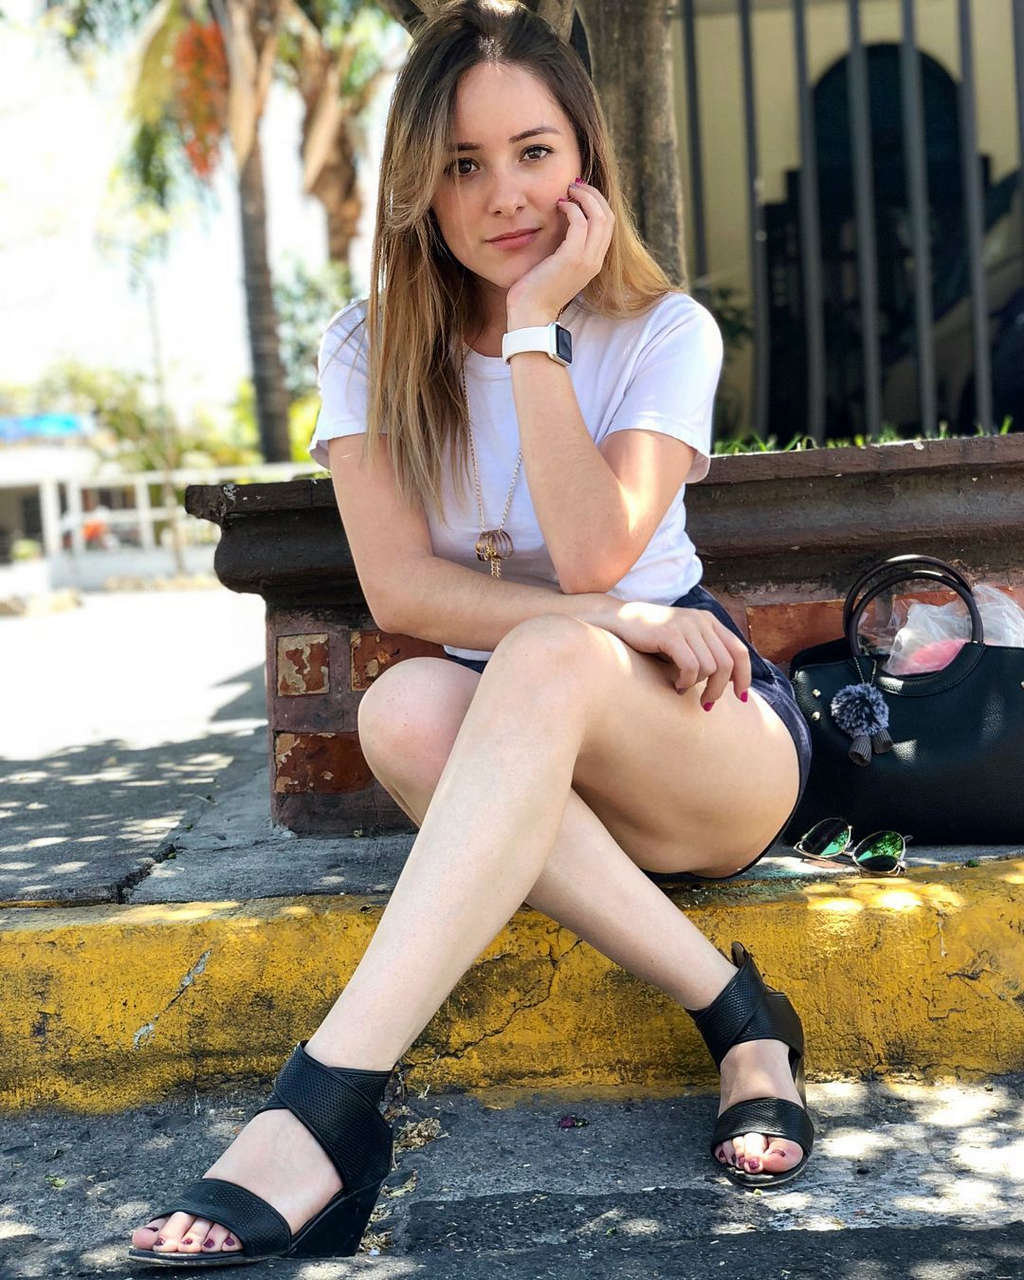 Paulina Hernandez Feet